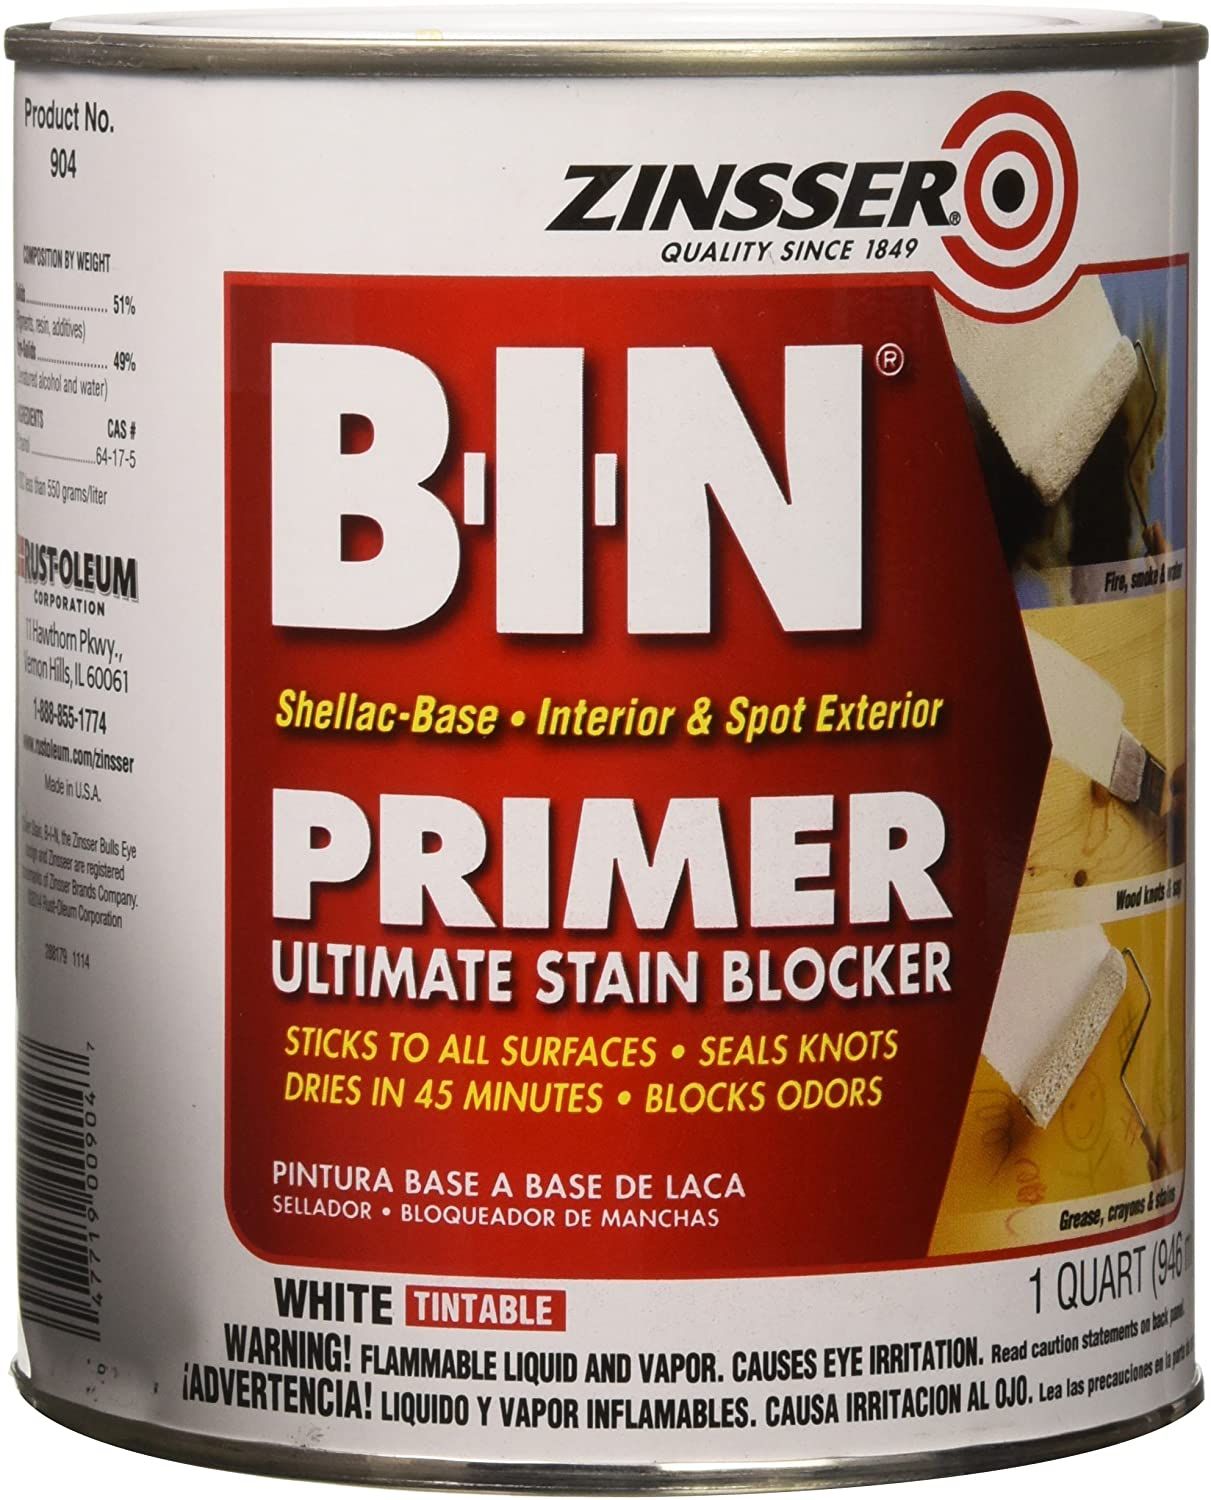 Zinsser B-I-N Shellac-Base Primer 1 Quart Can